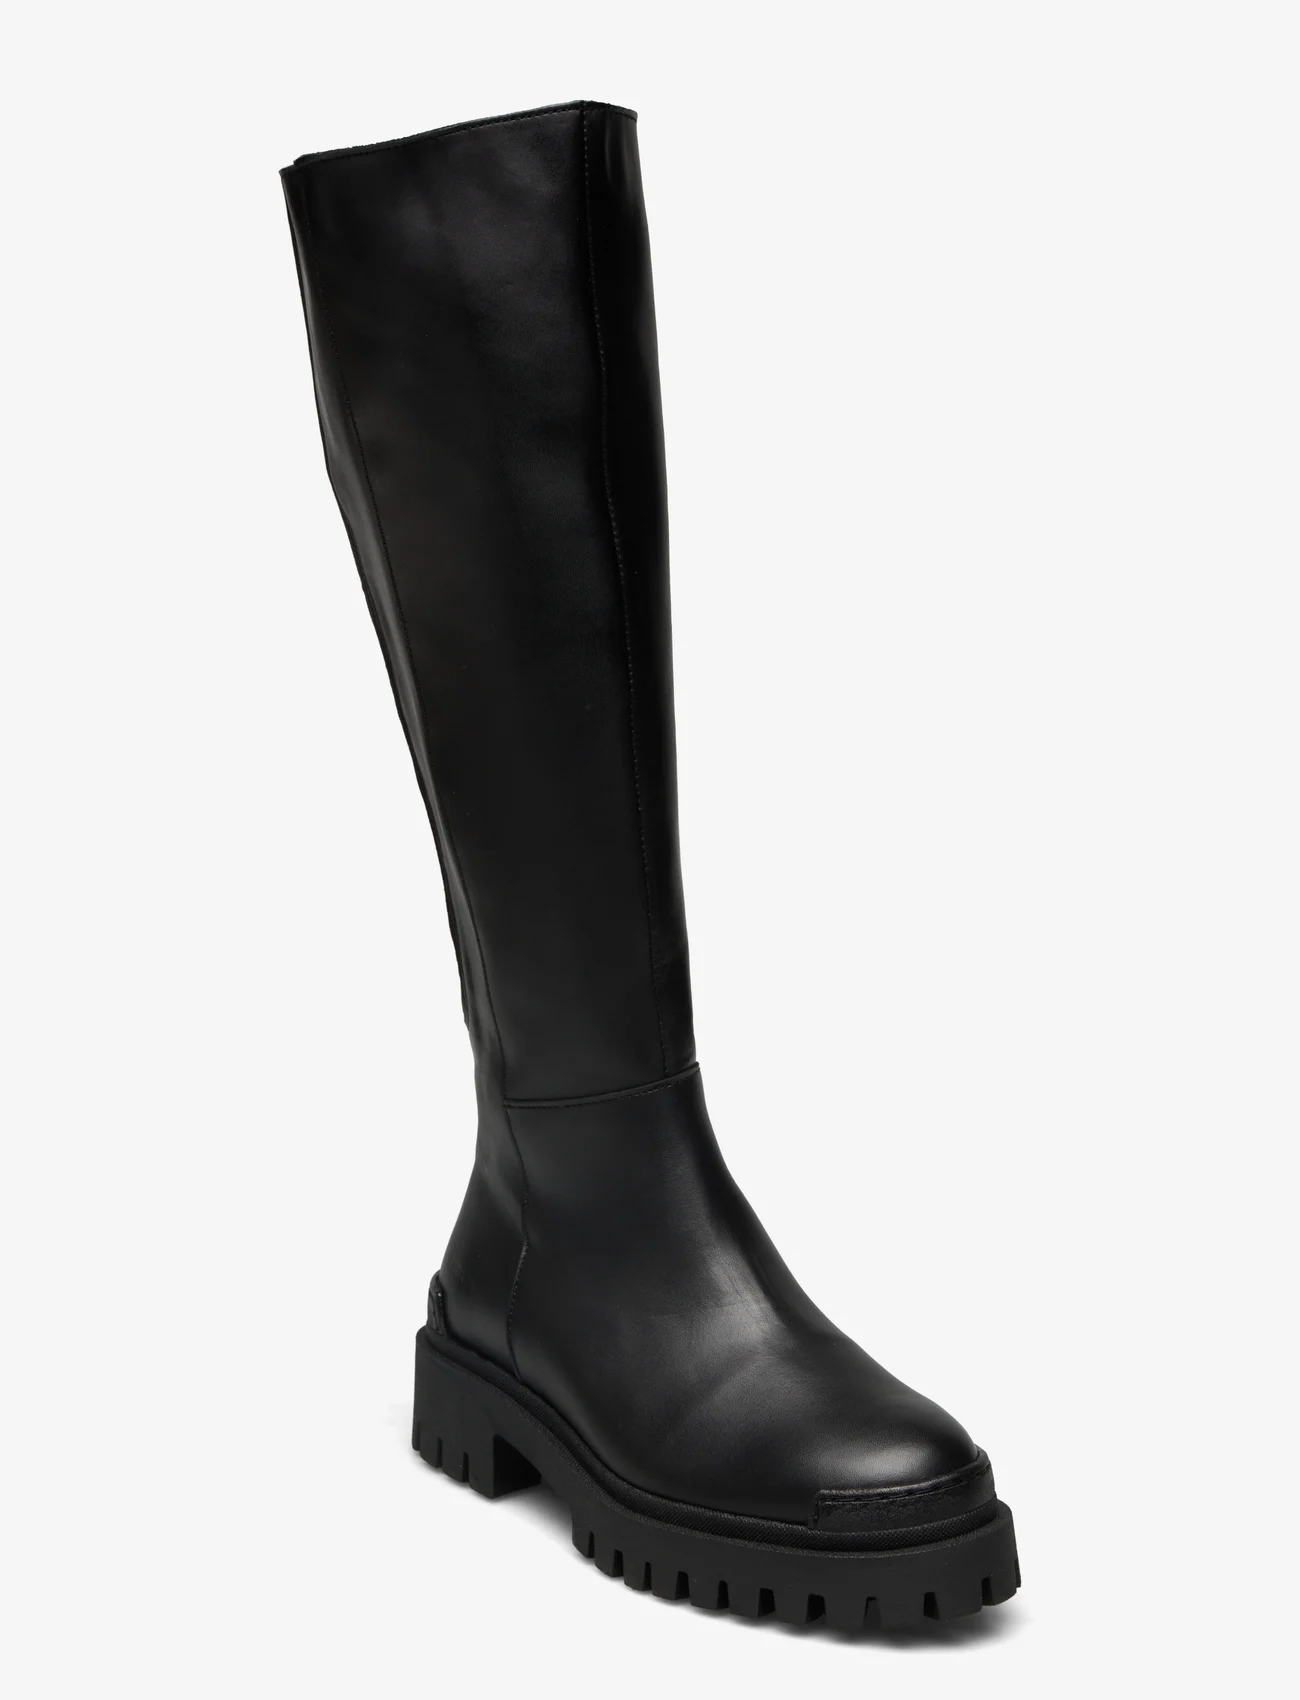 ANGULUS - Boots - flat - kniehohe stiefel - 1604/019 black/black - 0